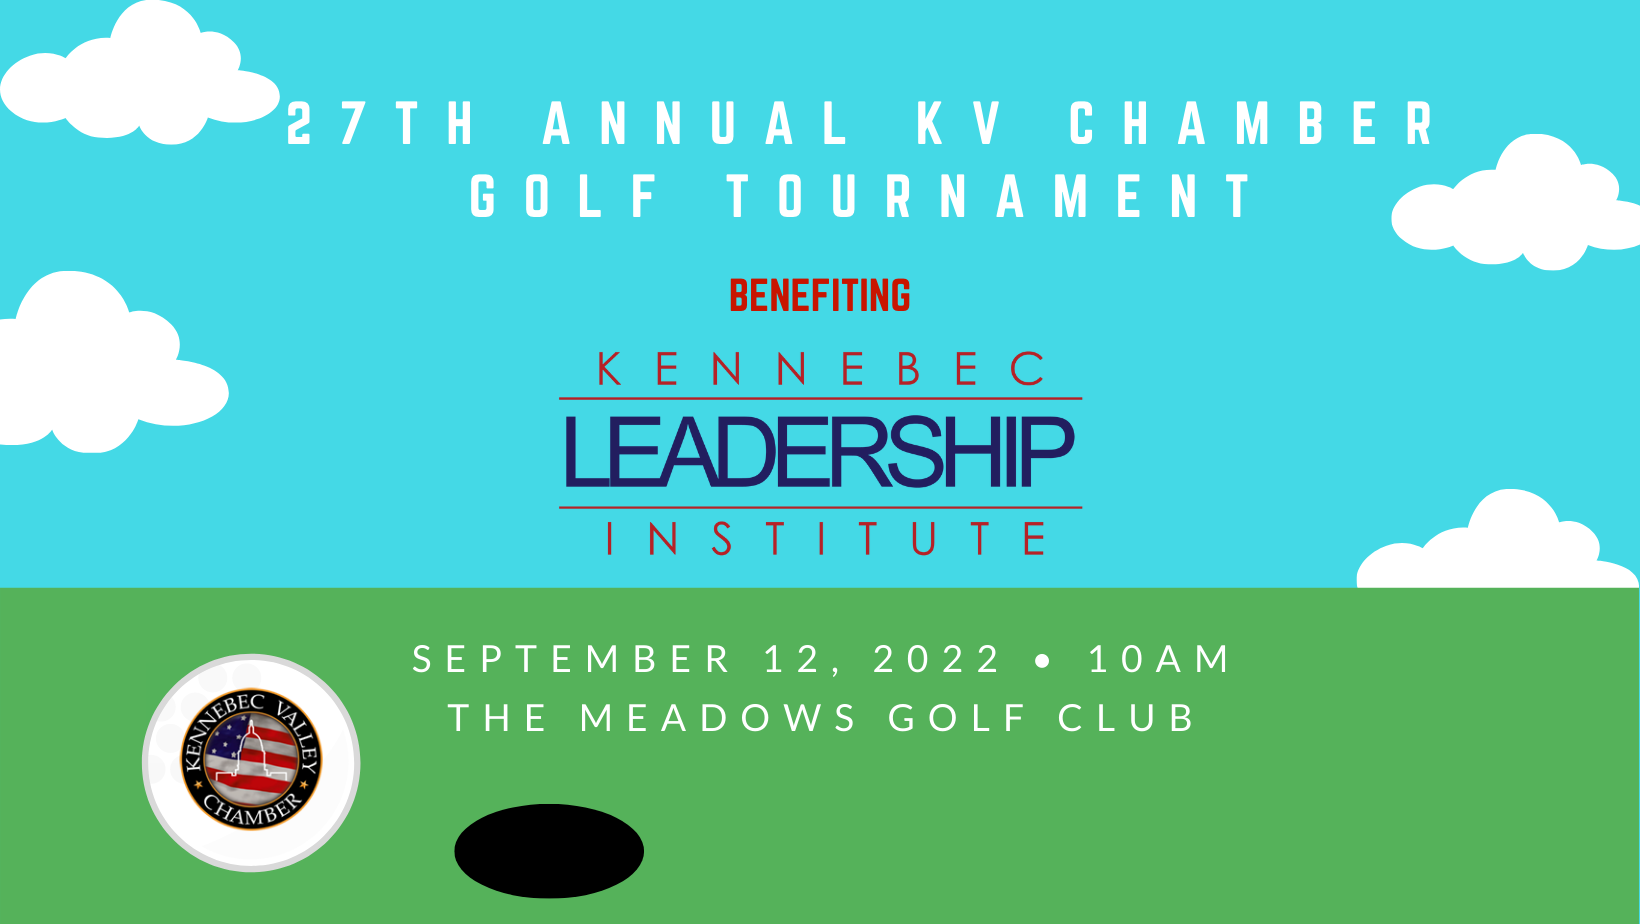 26th Annual KV Chamber Golf Tournament - benefitting Kennebec Leaership Institute